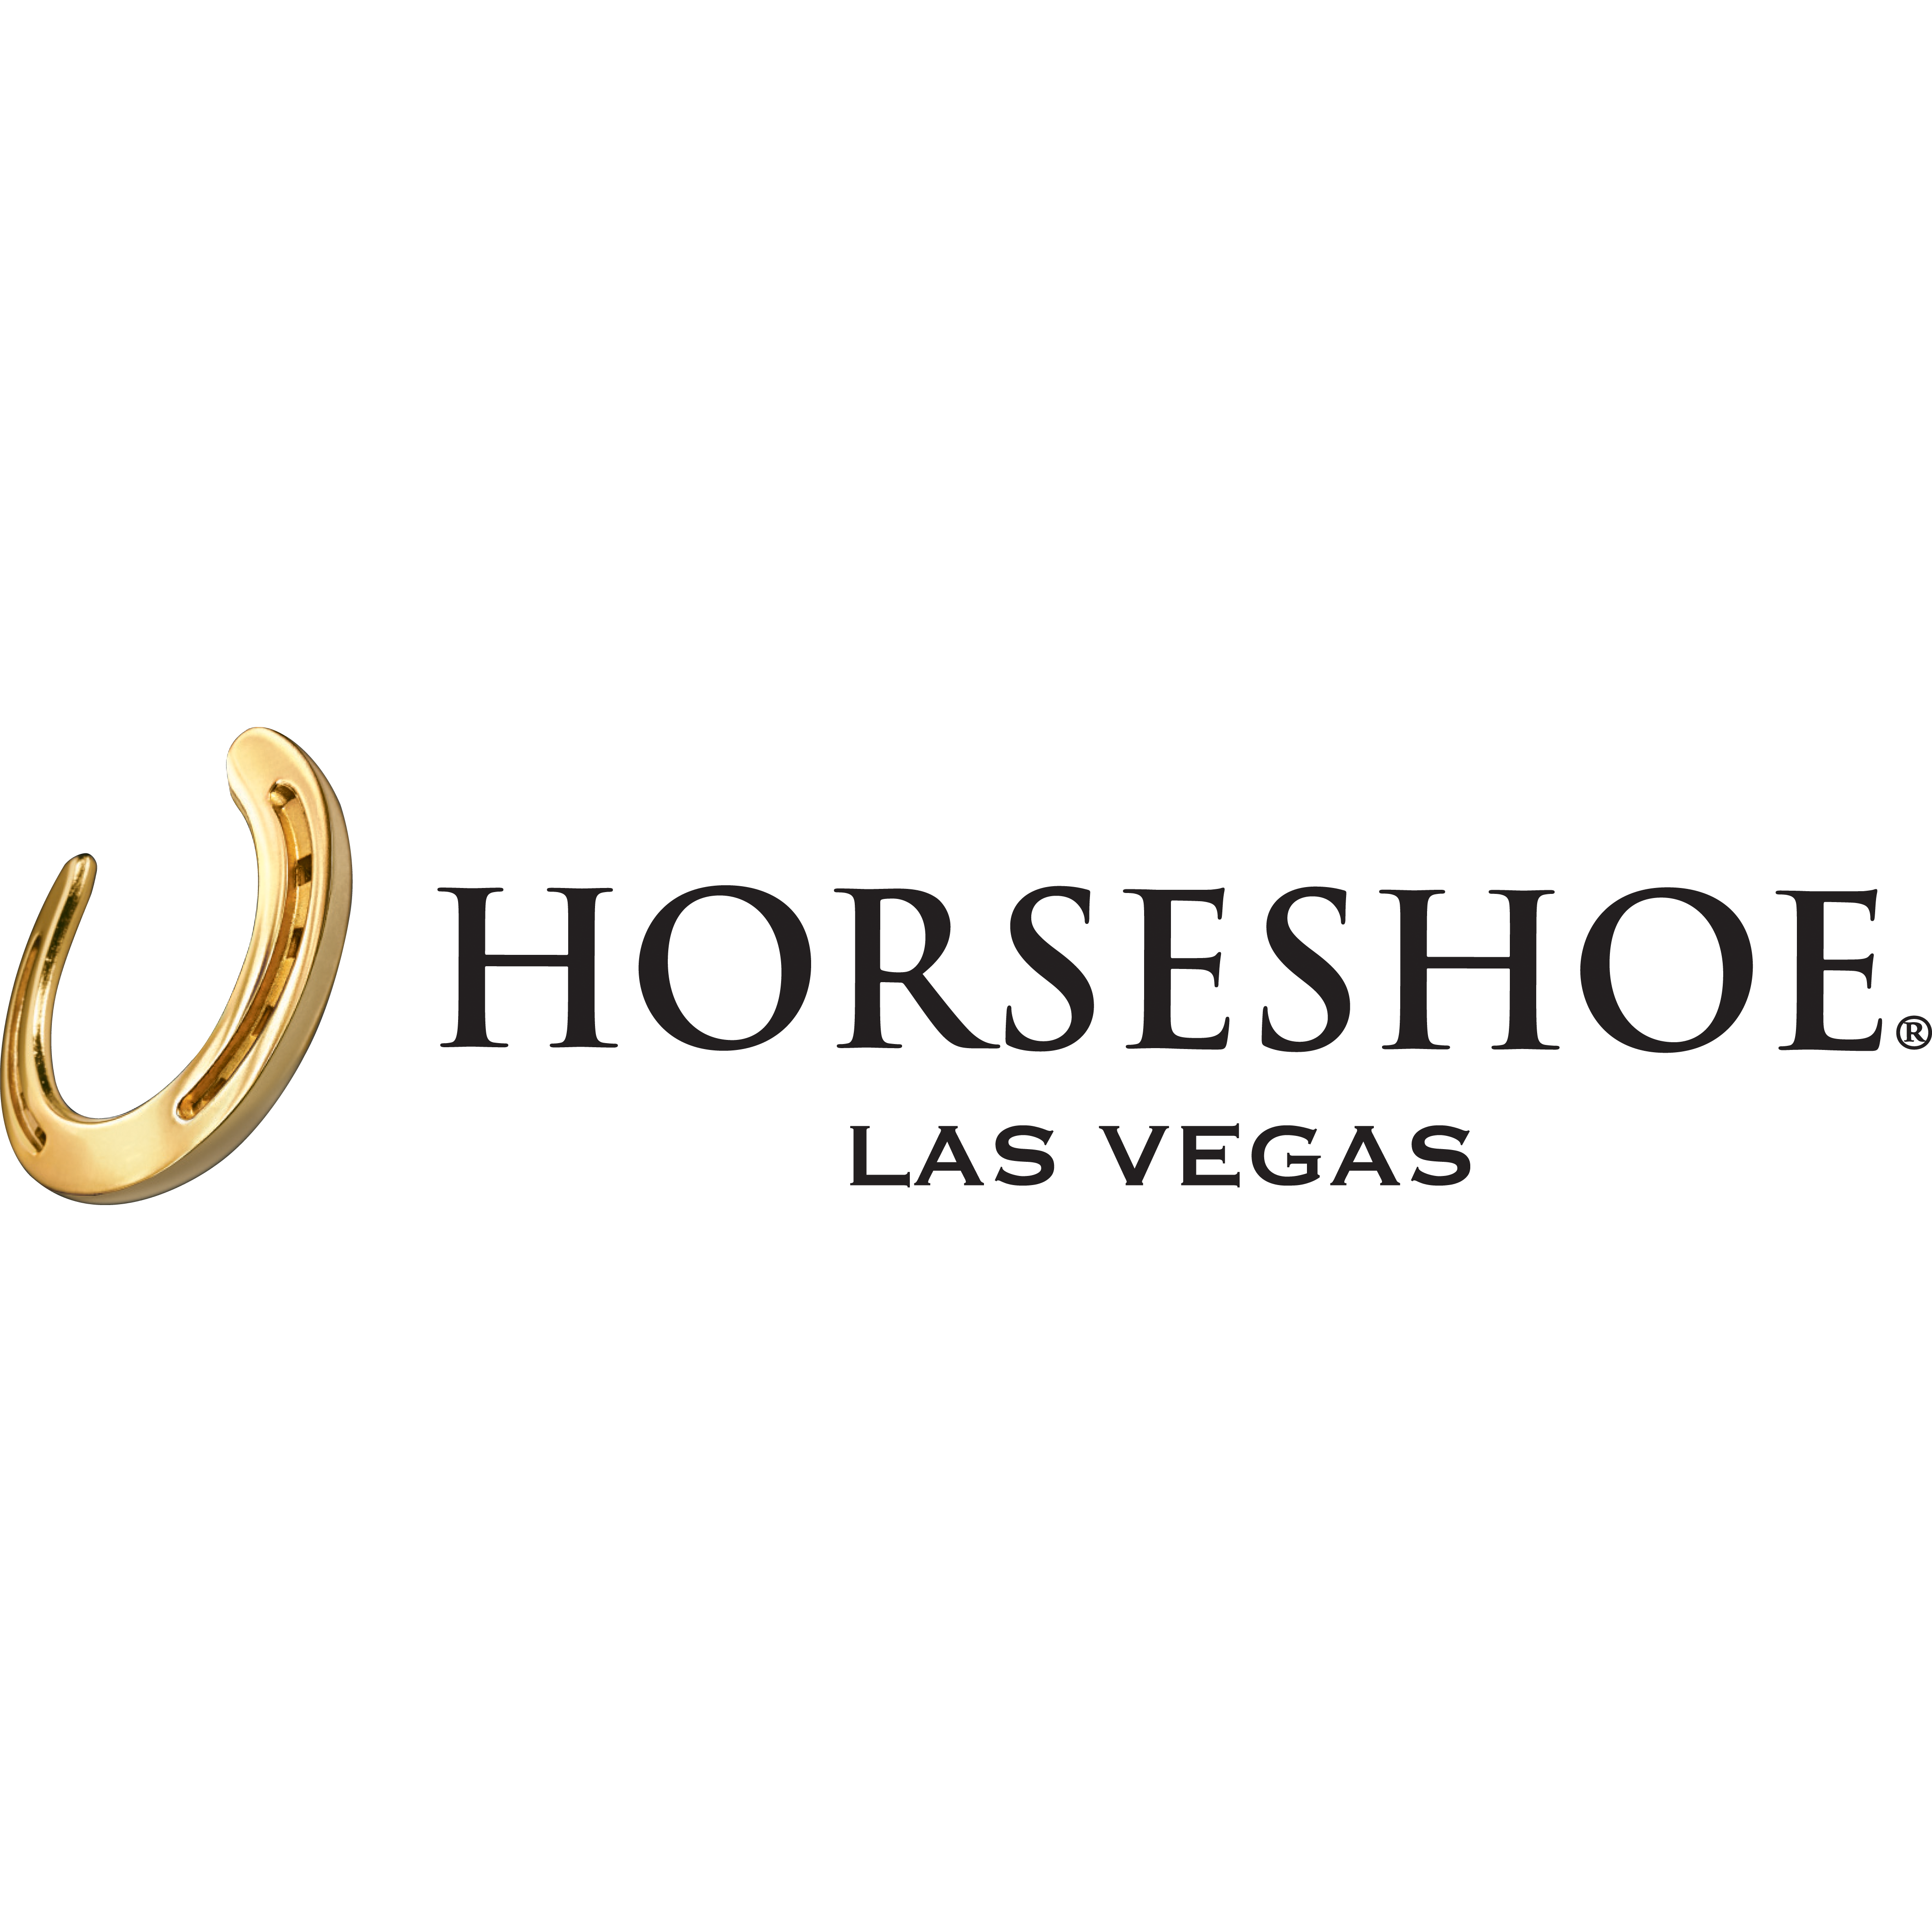 Horseshoe Las Vegas Center Strip Hotel & Casino in Las Vegas, NV 89109